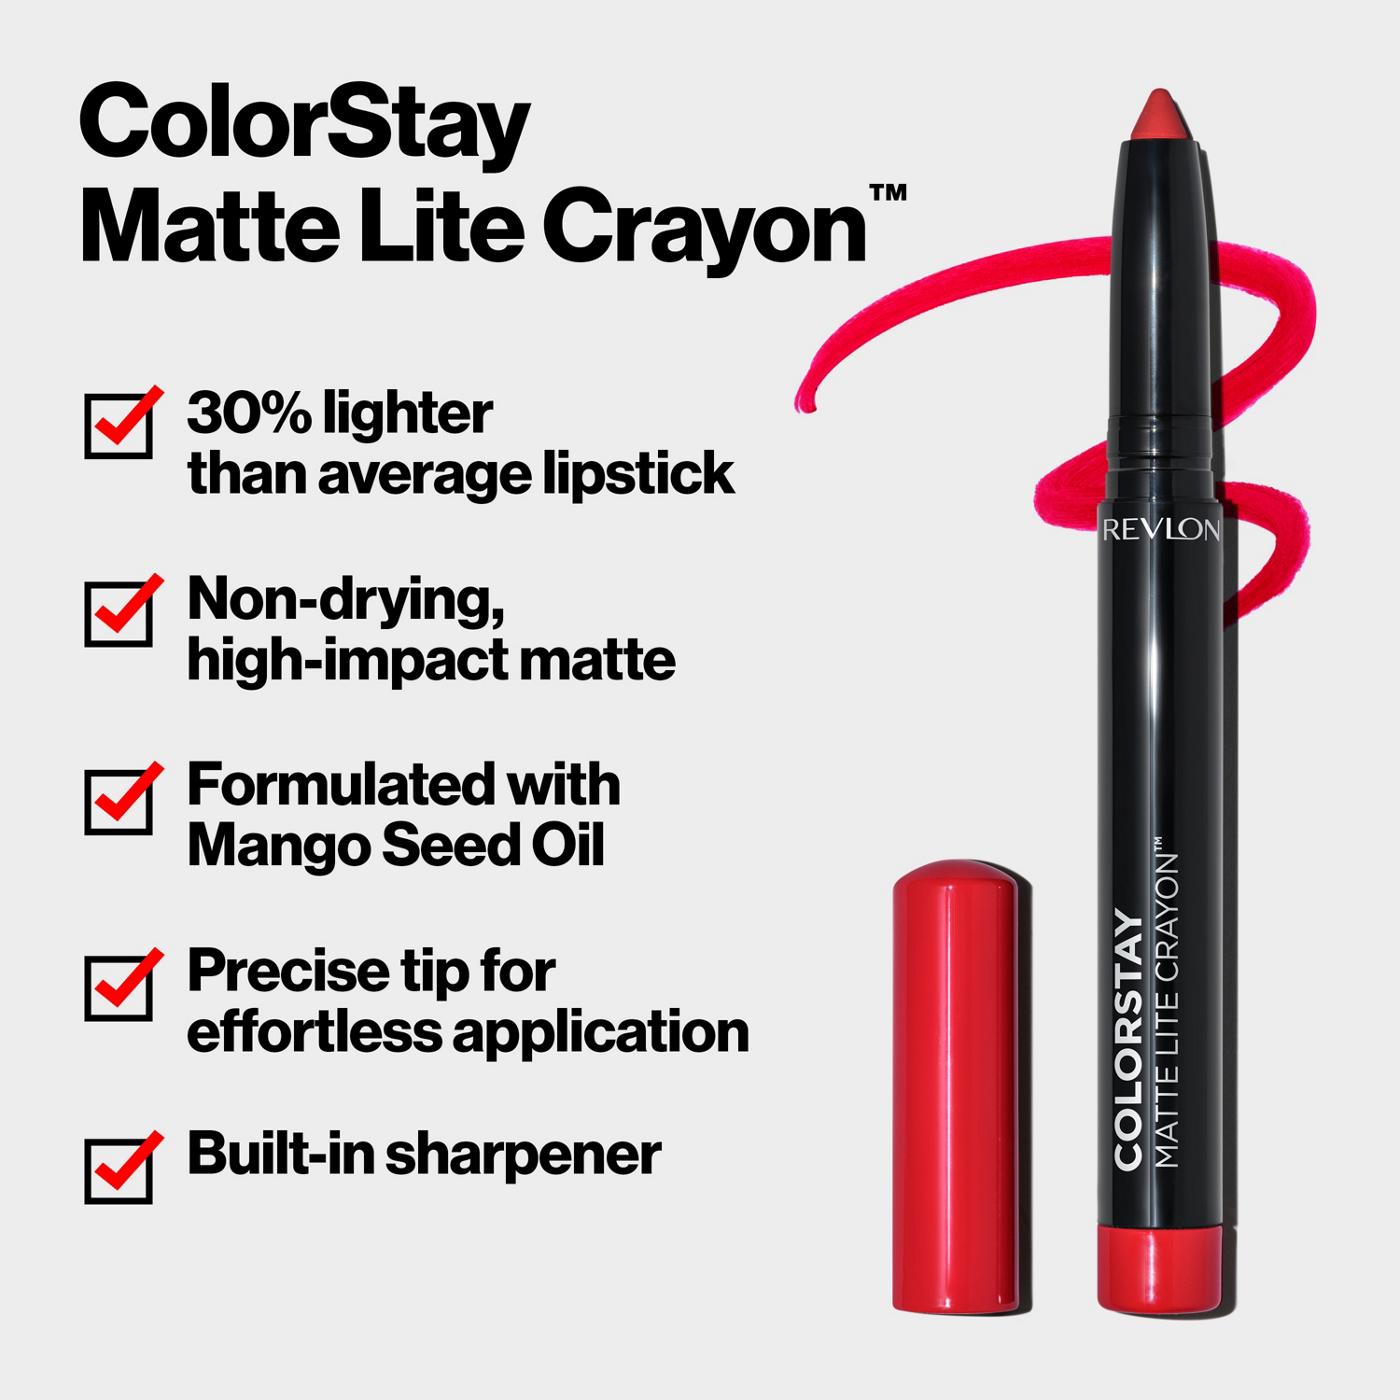 Revlon ColorStay Matte Lite Crayon Lipstick - Lift Off; image 7 of 7